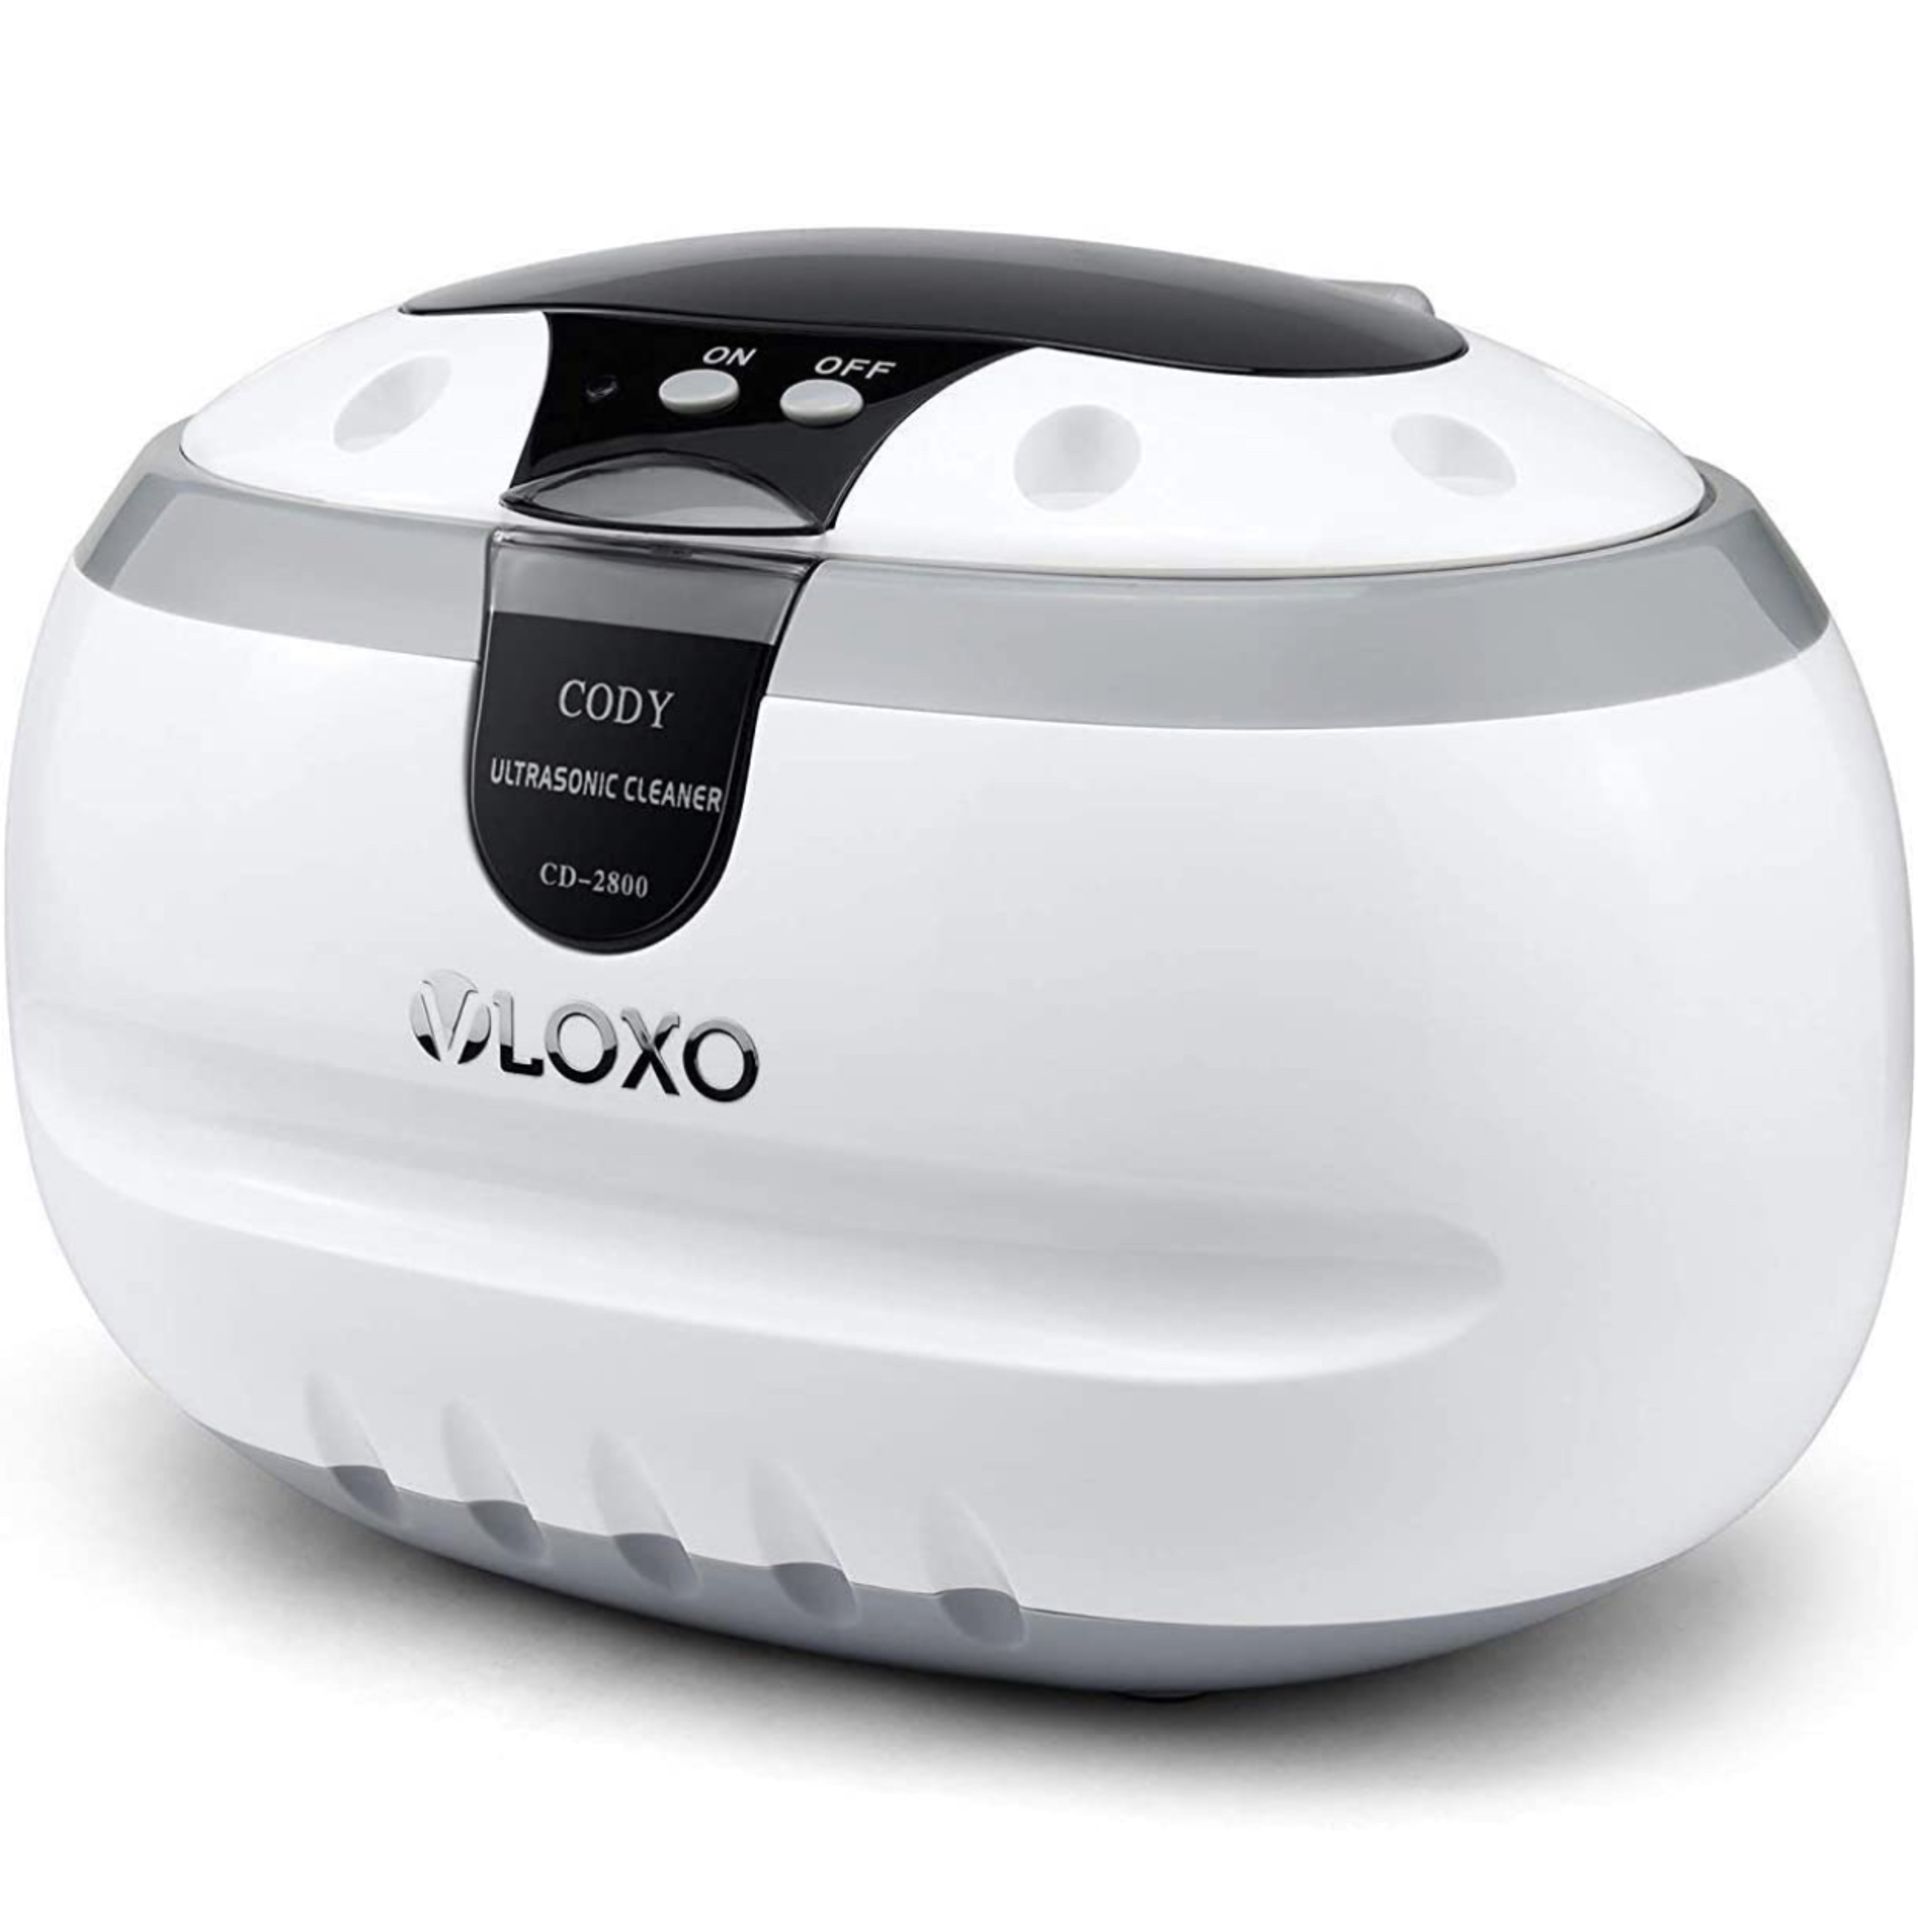 Vloxo CD-2800 Ultrasonic Cleaner Jewellery Cleaner 600ml RRP £39.99